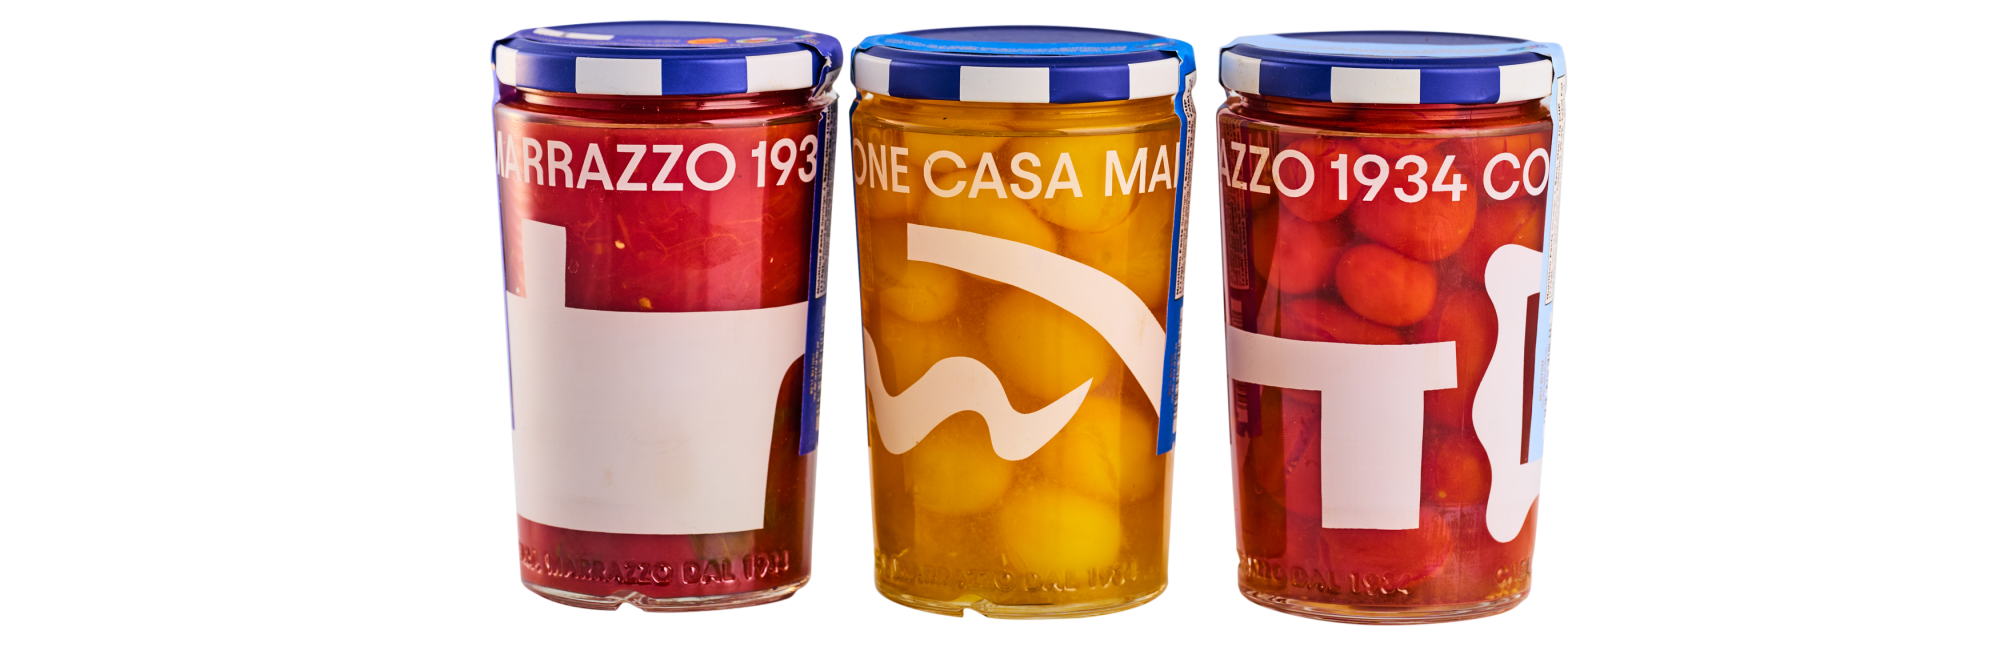 Three jars of Casa Marrazzo tomatoes